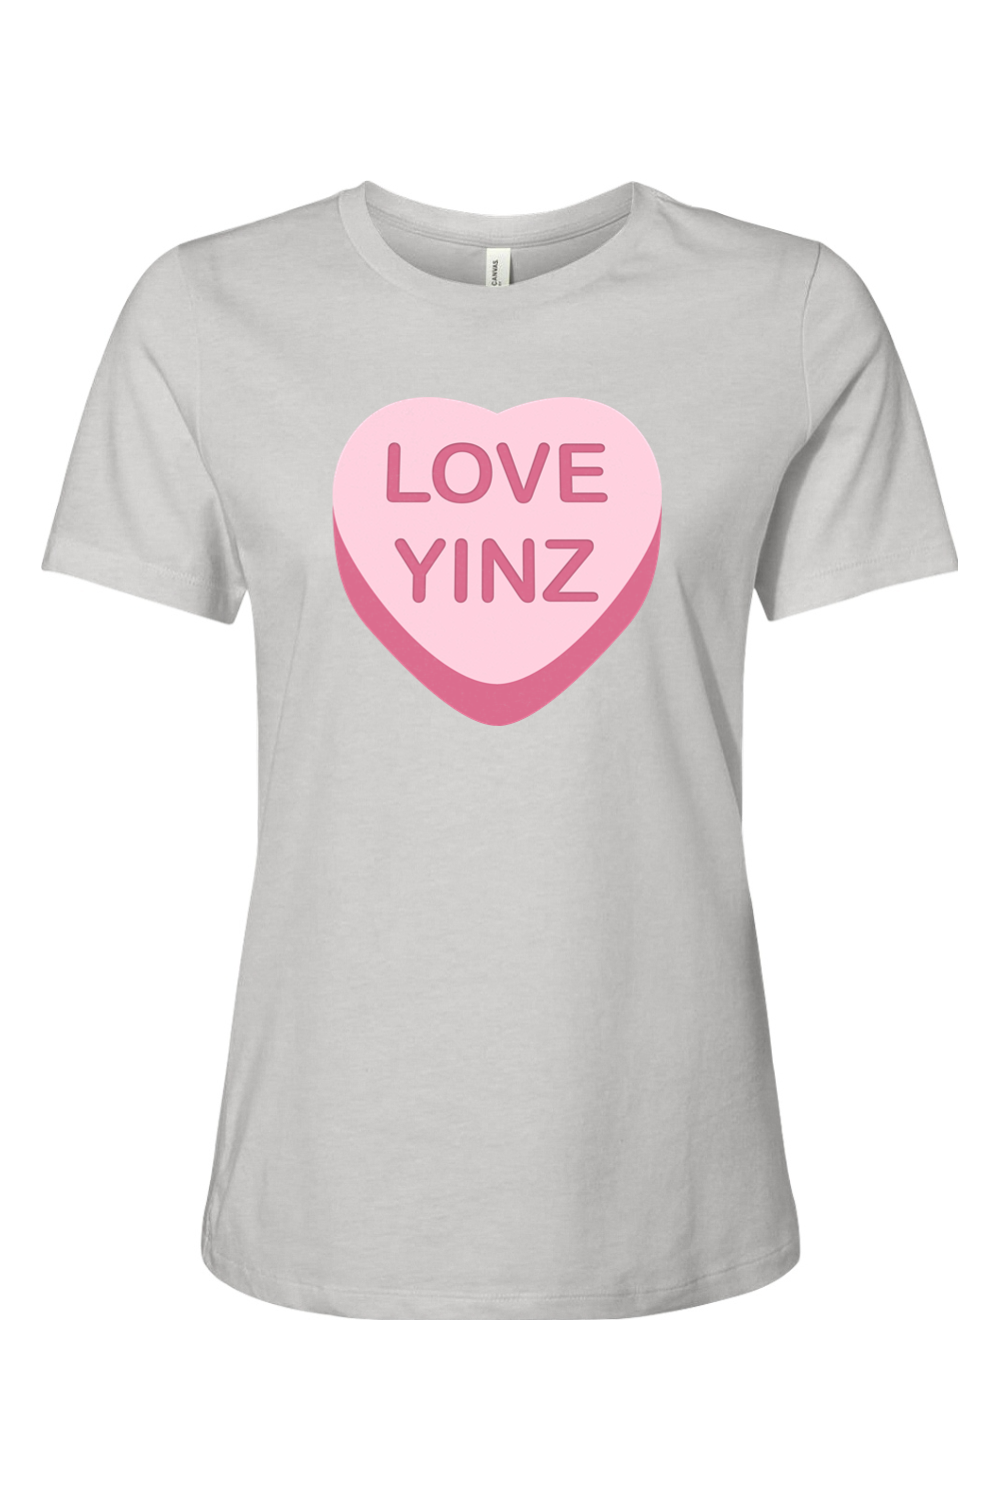 Love Yinz - Conversation Heart - Ladies Tee - Yinzylvania